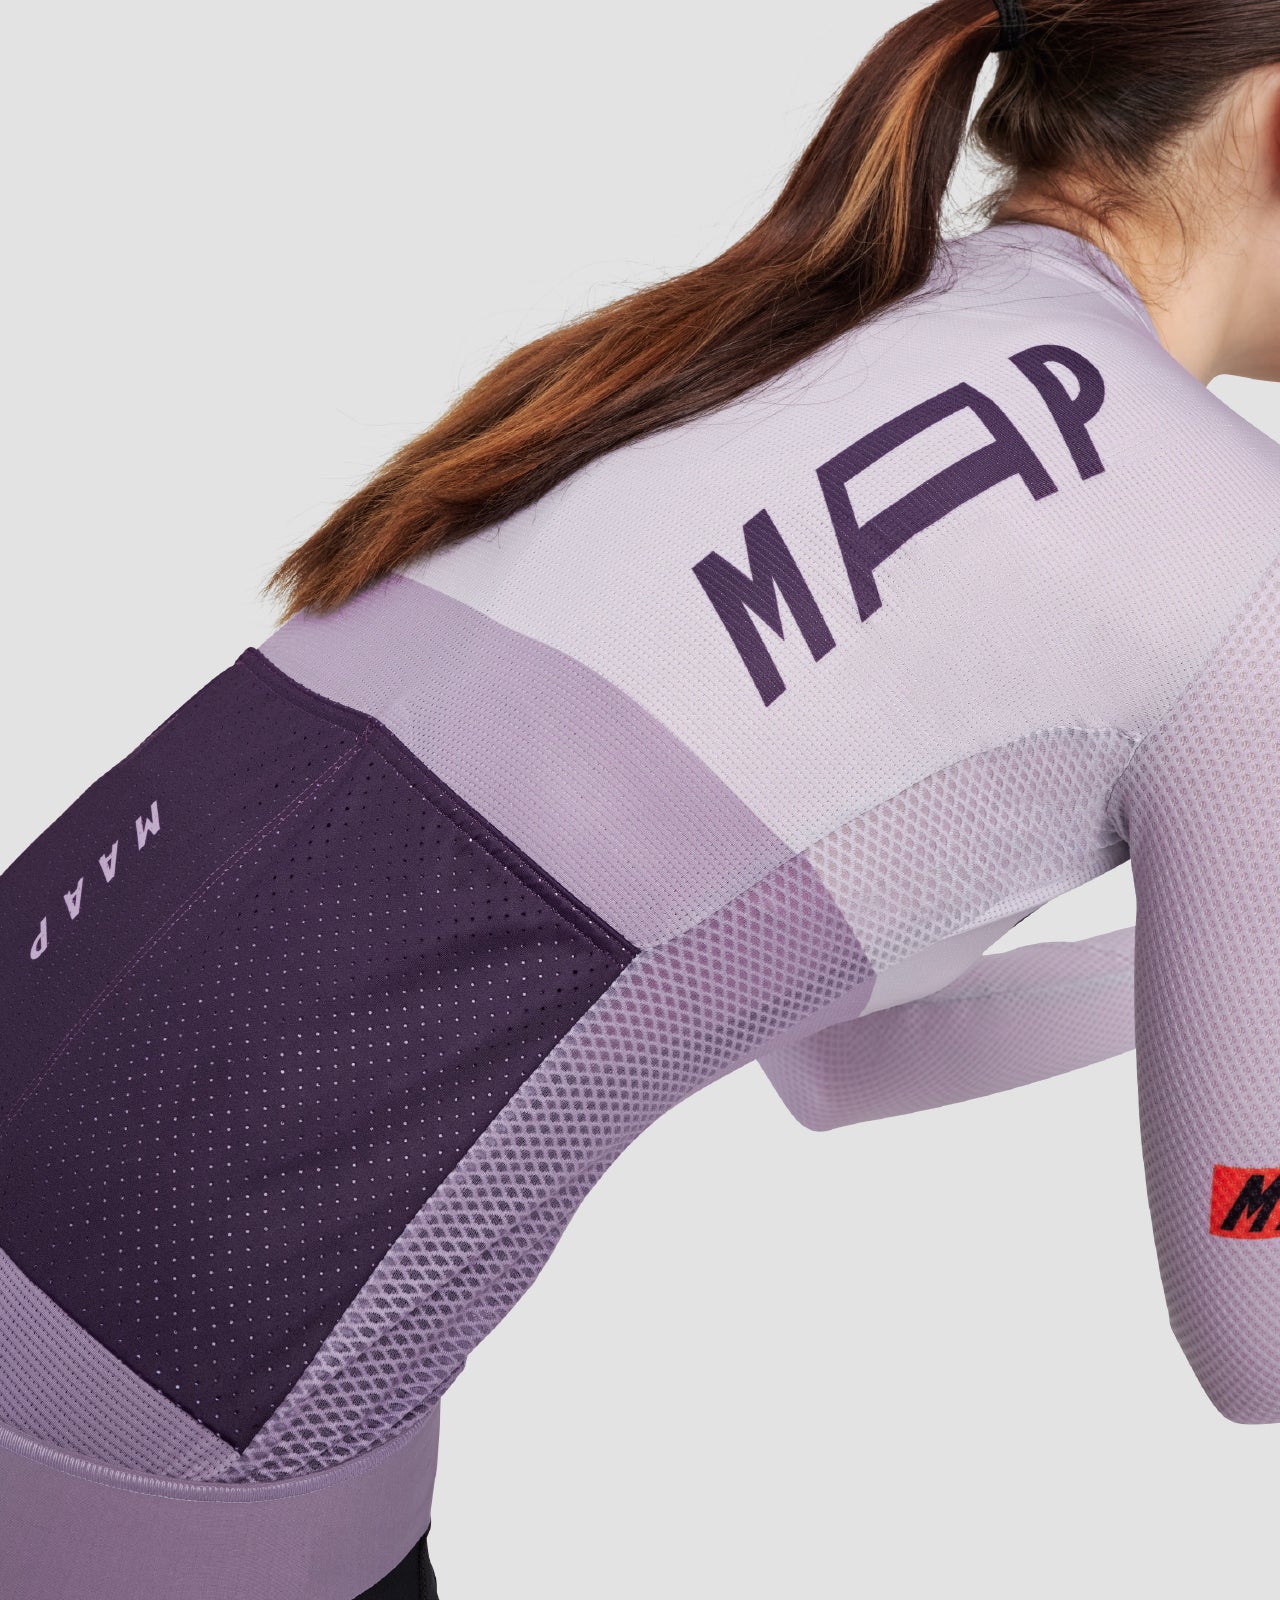 Women's Adapt Pro Air Jersey - MAAP Cycling Apparel